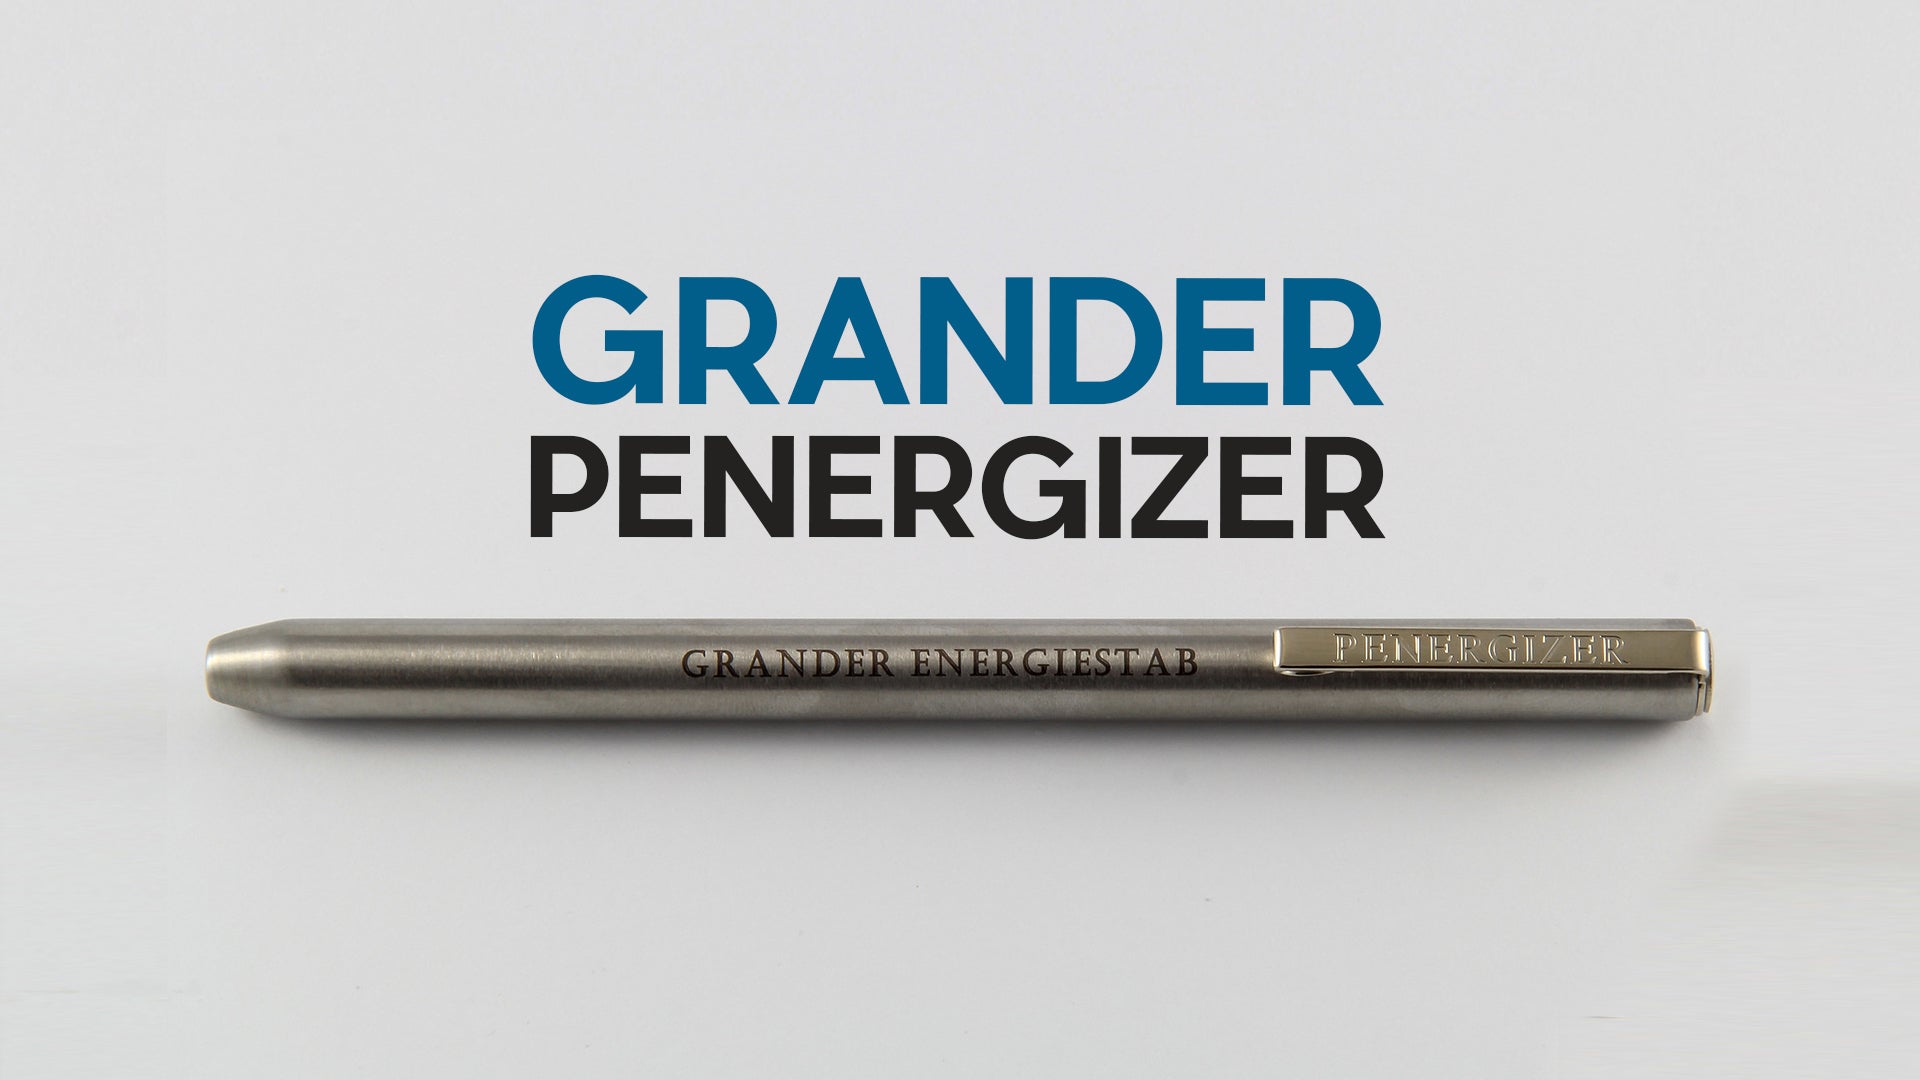 Grander Penergizer Spotlight